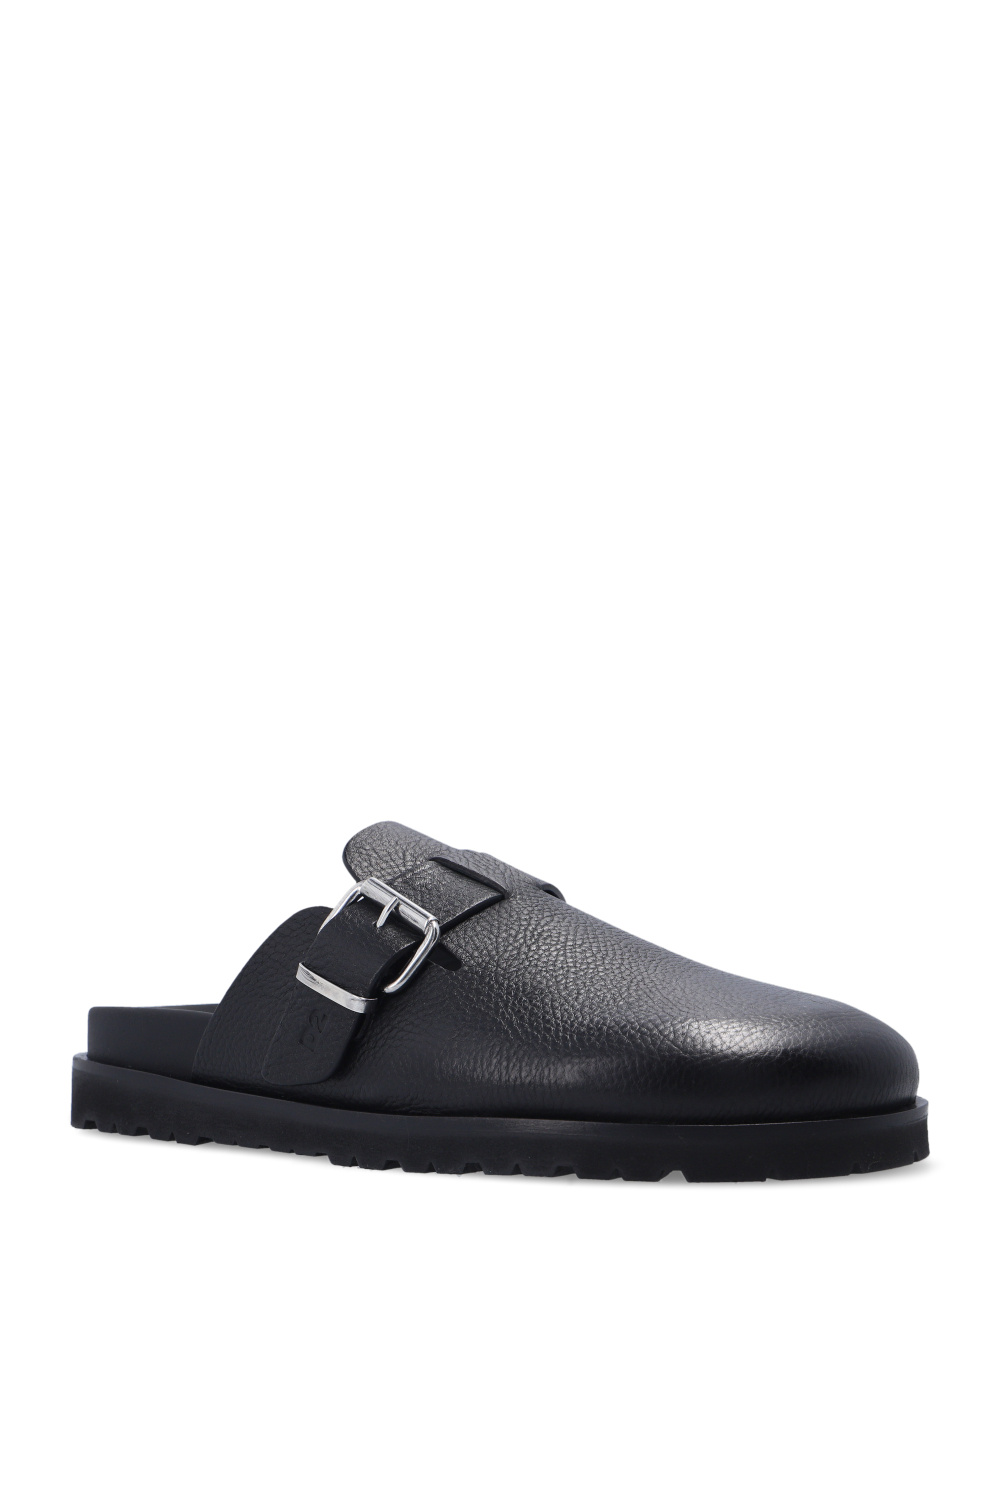 Dsquared2 'Sonny' leather slides | Men's Shoes | Vitkac